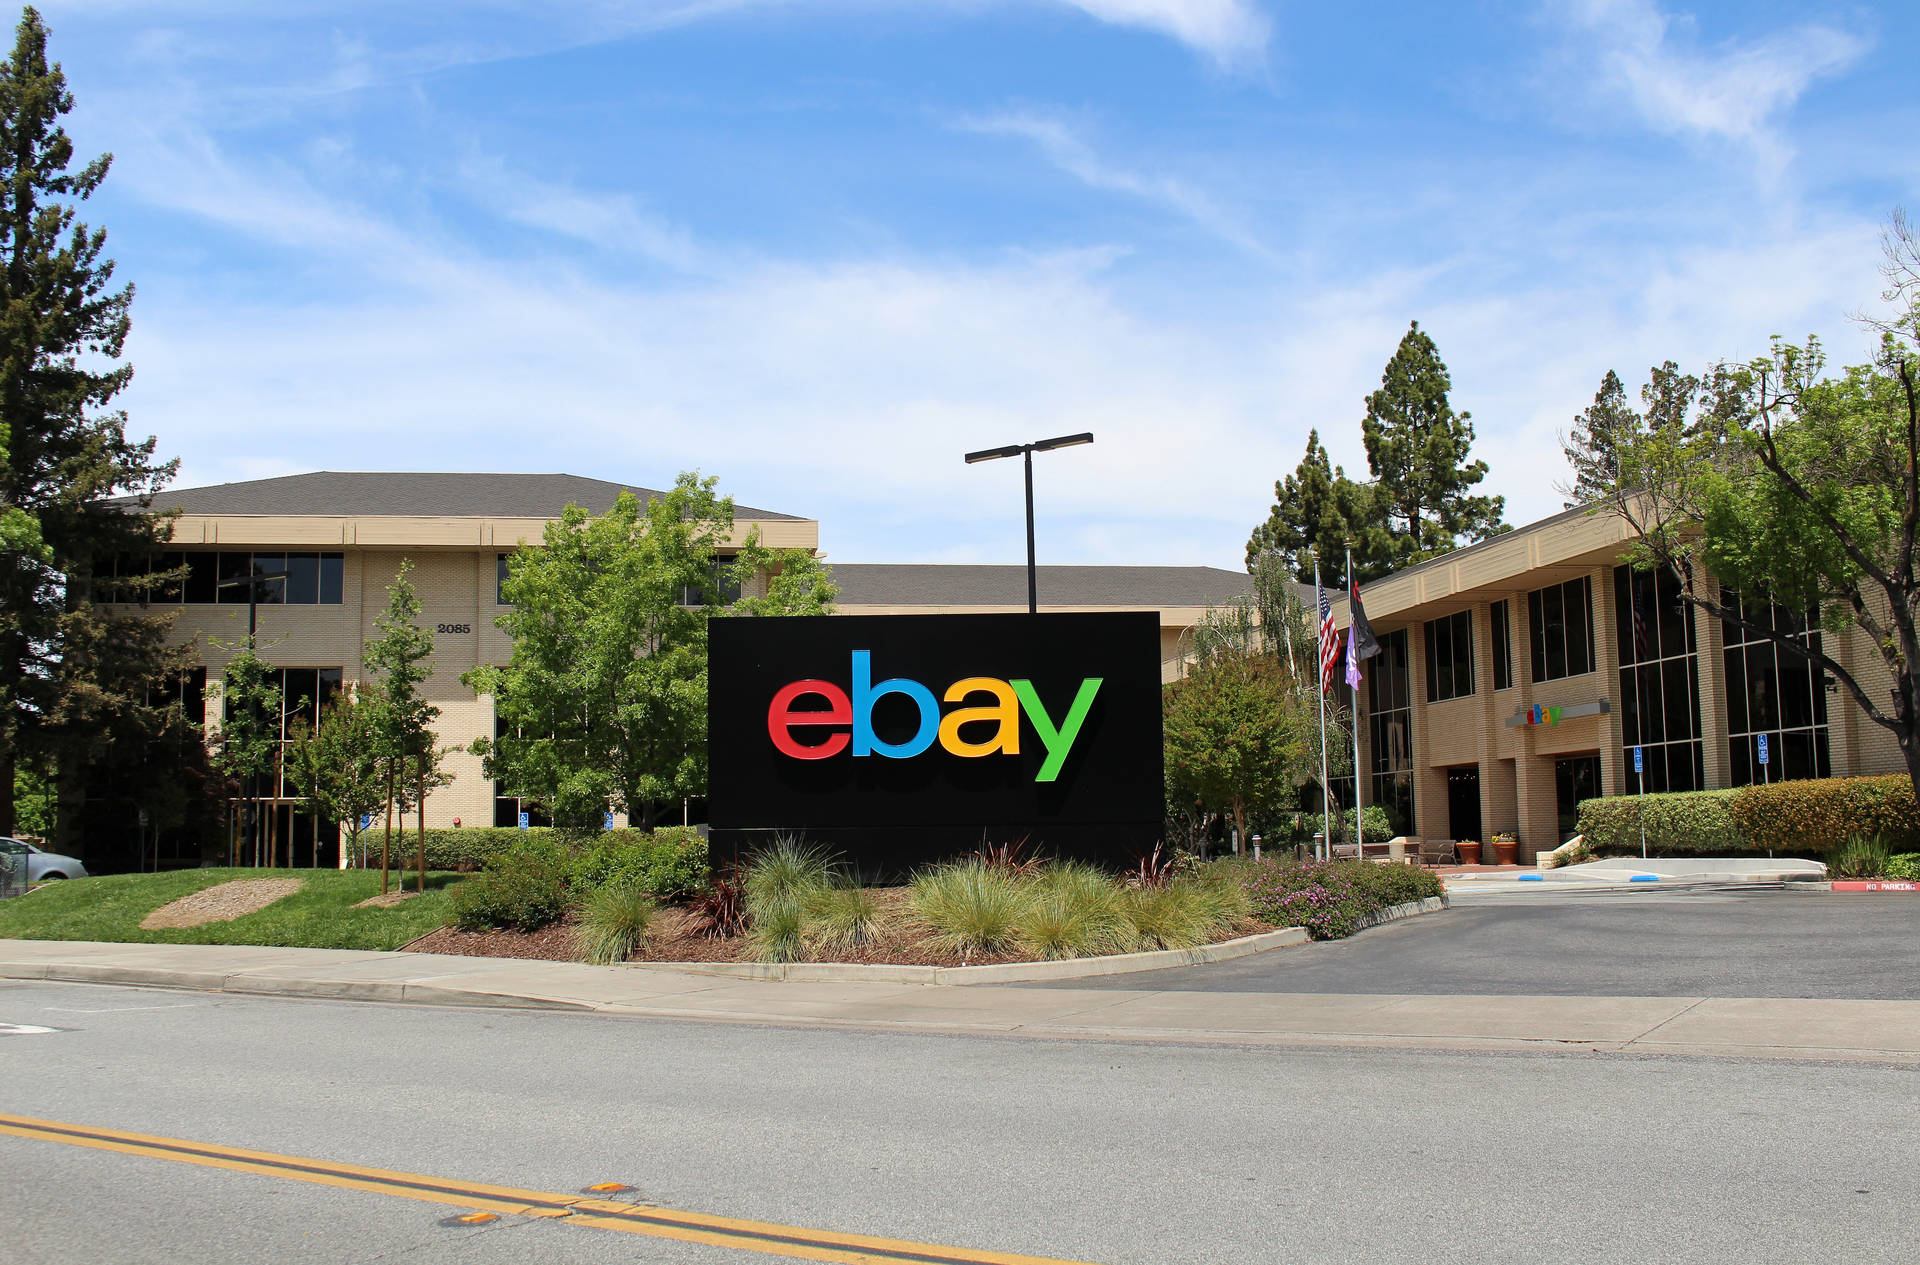 Ebay Sign Building Front